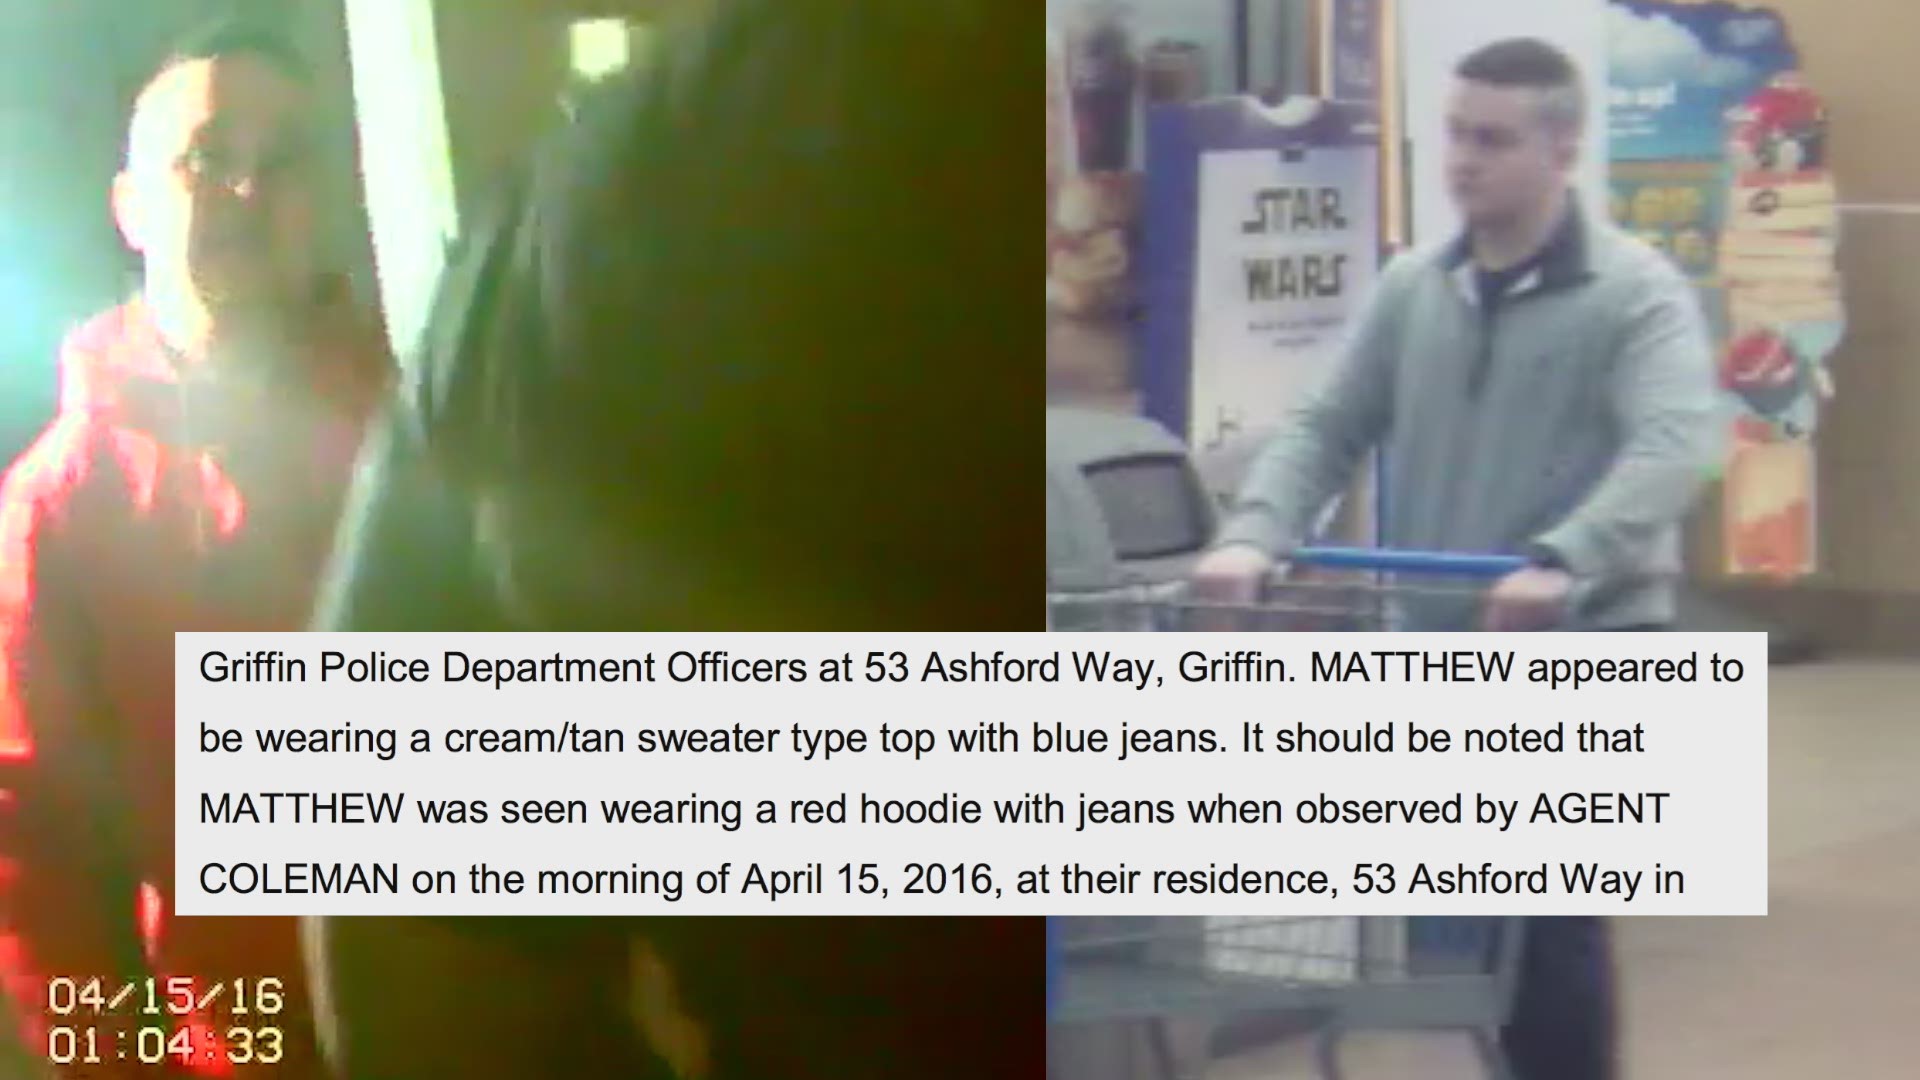 What was Matthew Boynton wearing?